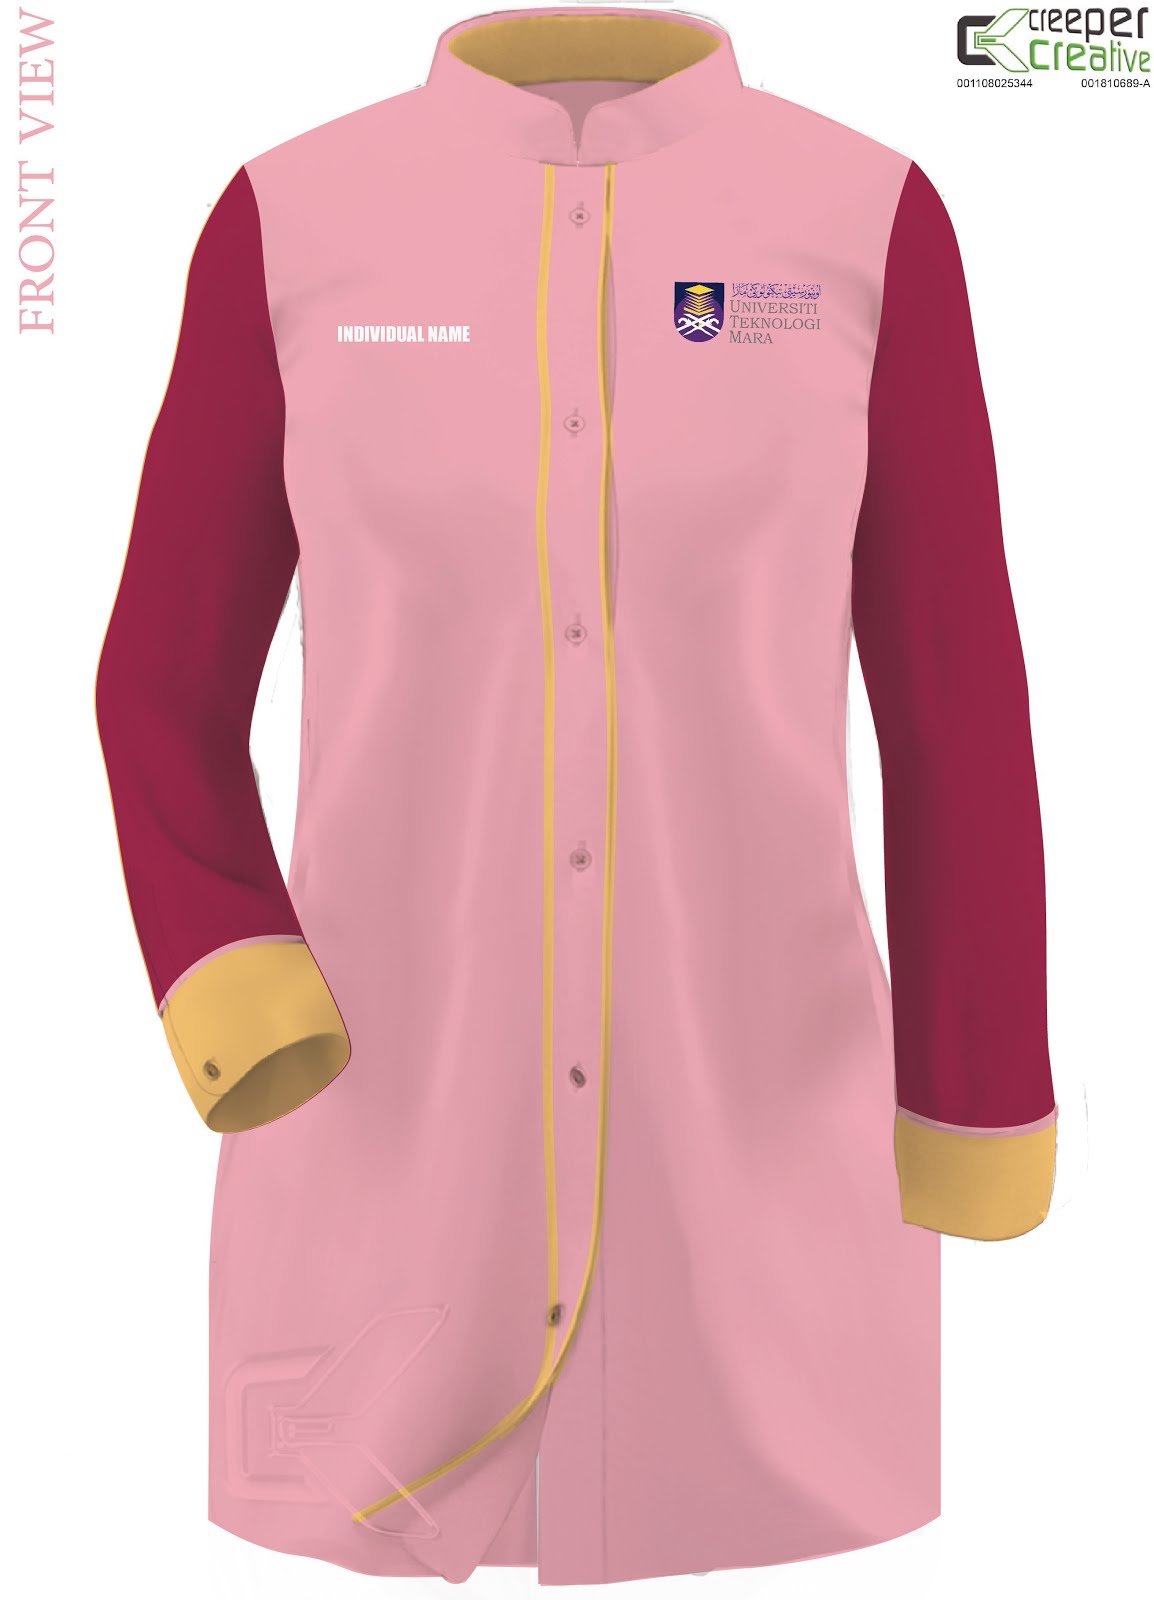  Baju Korporat UiTM  Polo Shirt Tee